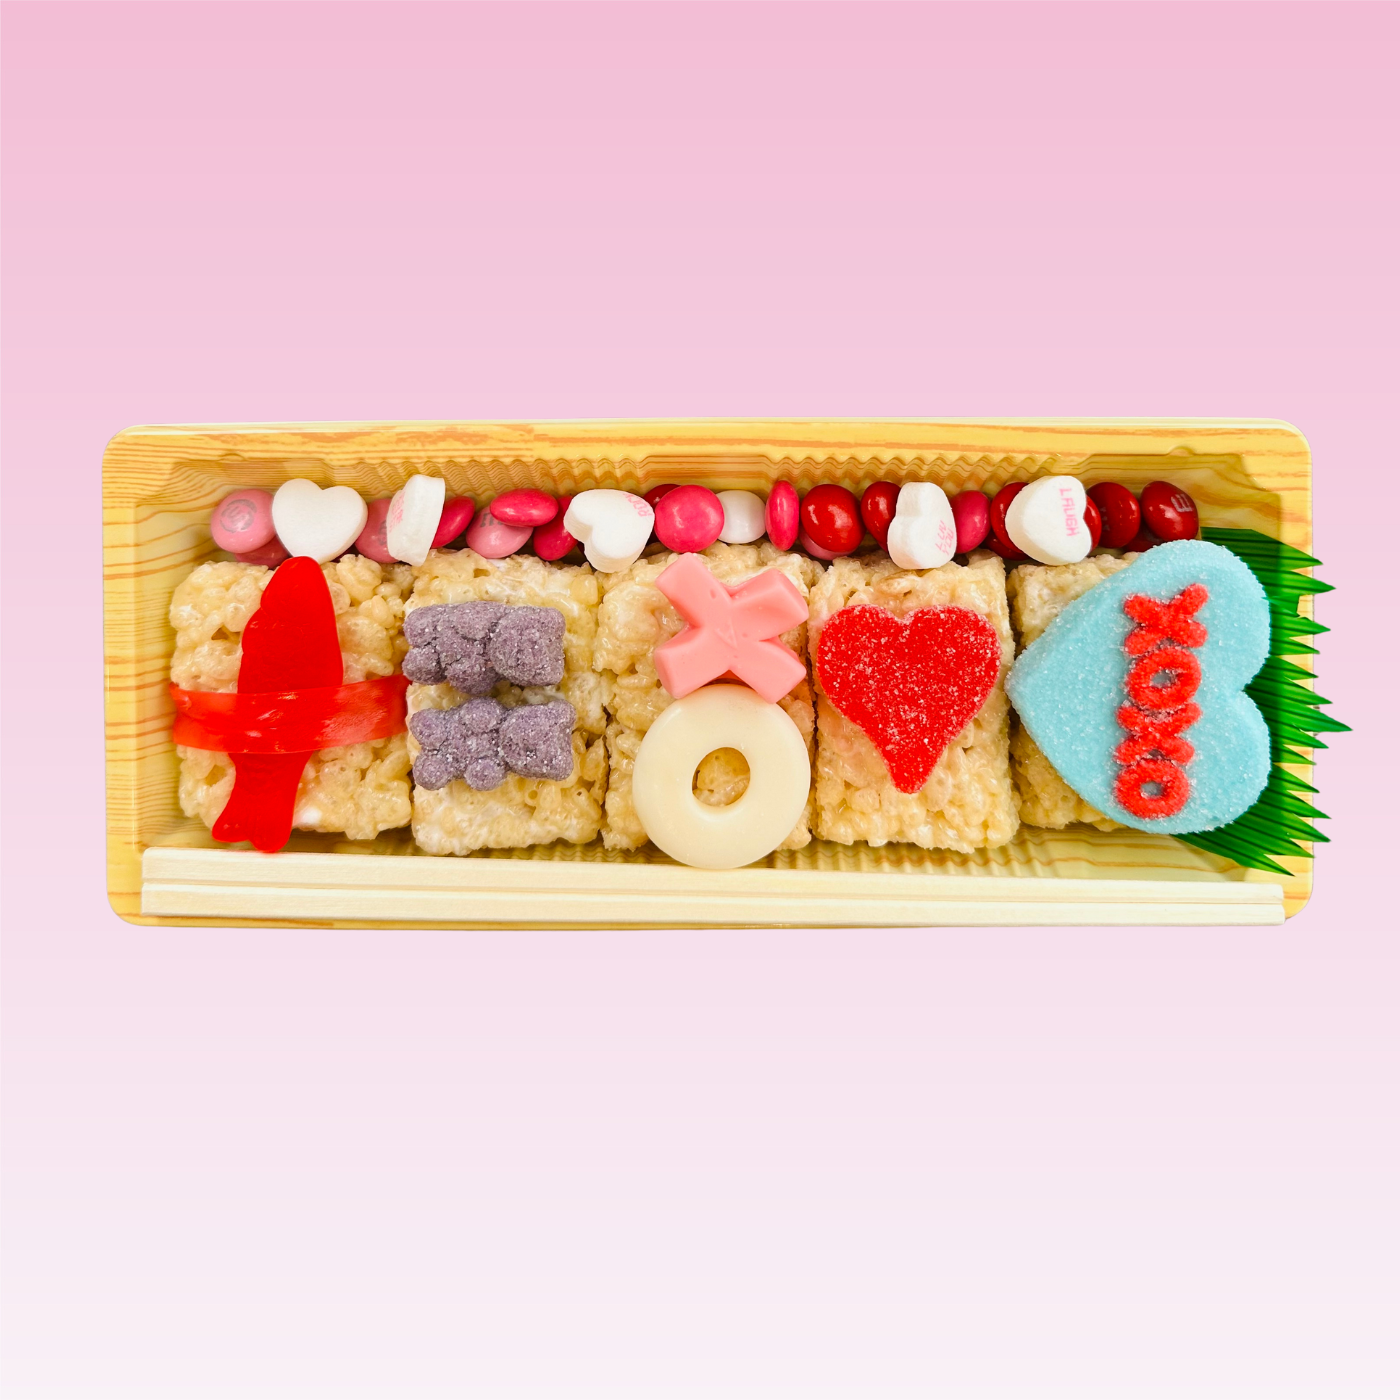 Valentine's Day 5 piece bento box - Limited offer